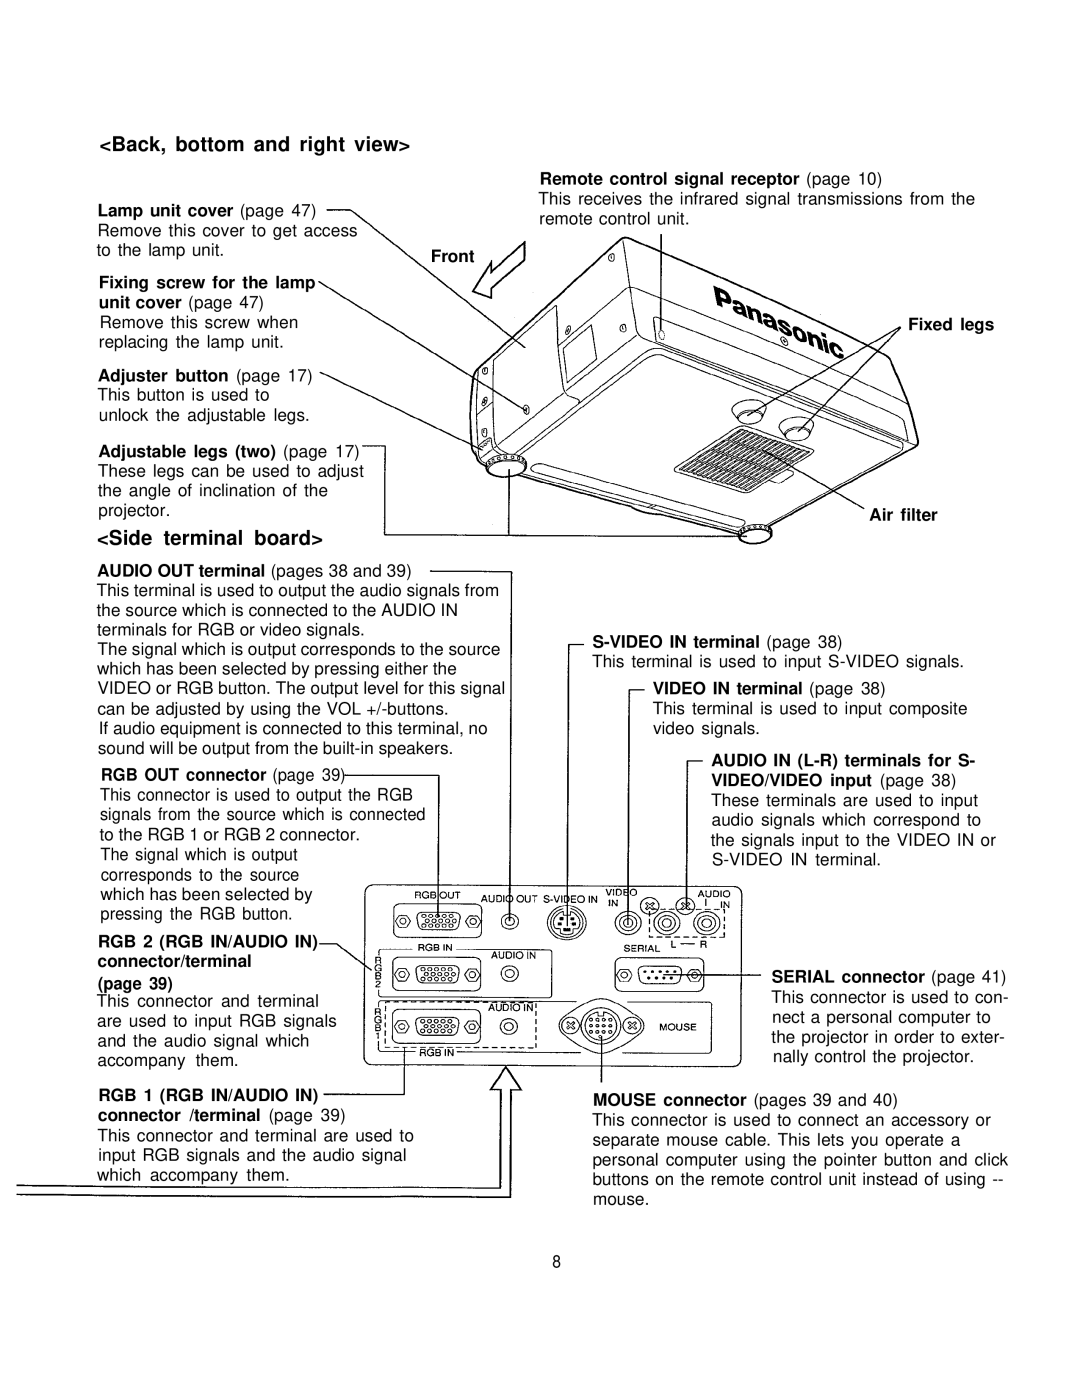 Panasonic PT-L795U manual Back, bottom and right view, Side terminal board 